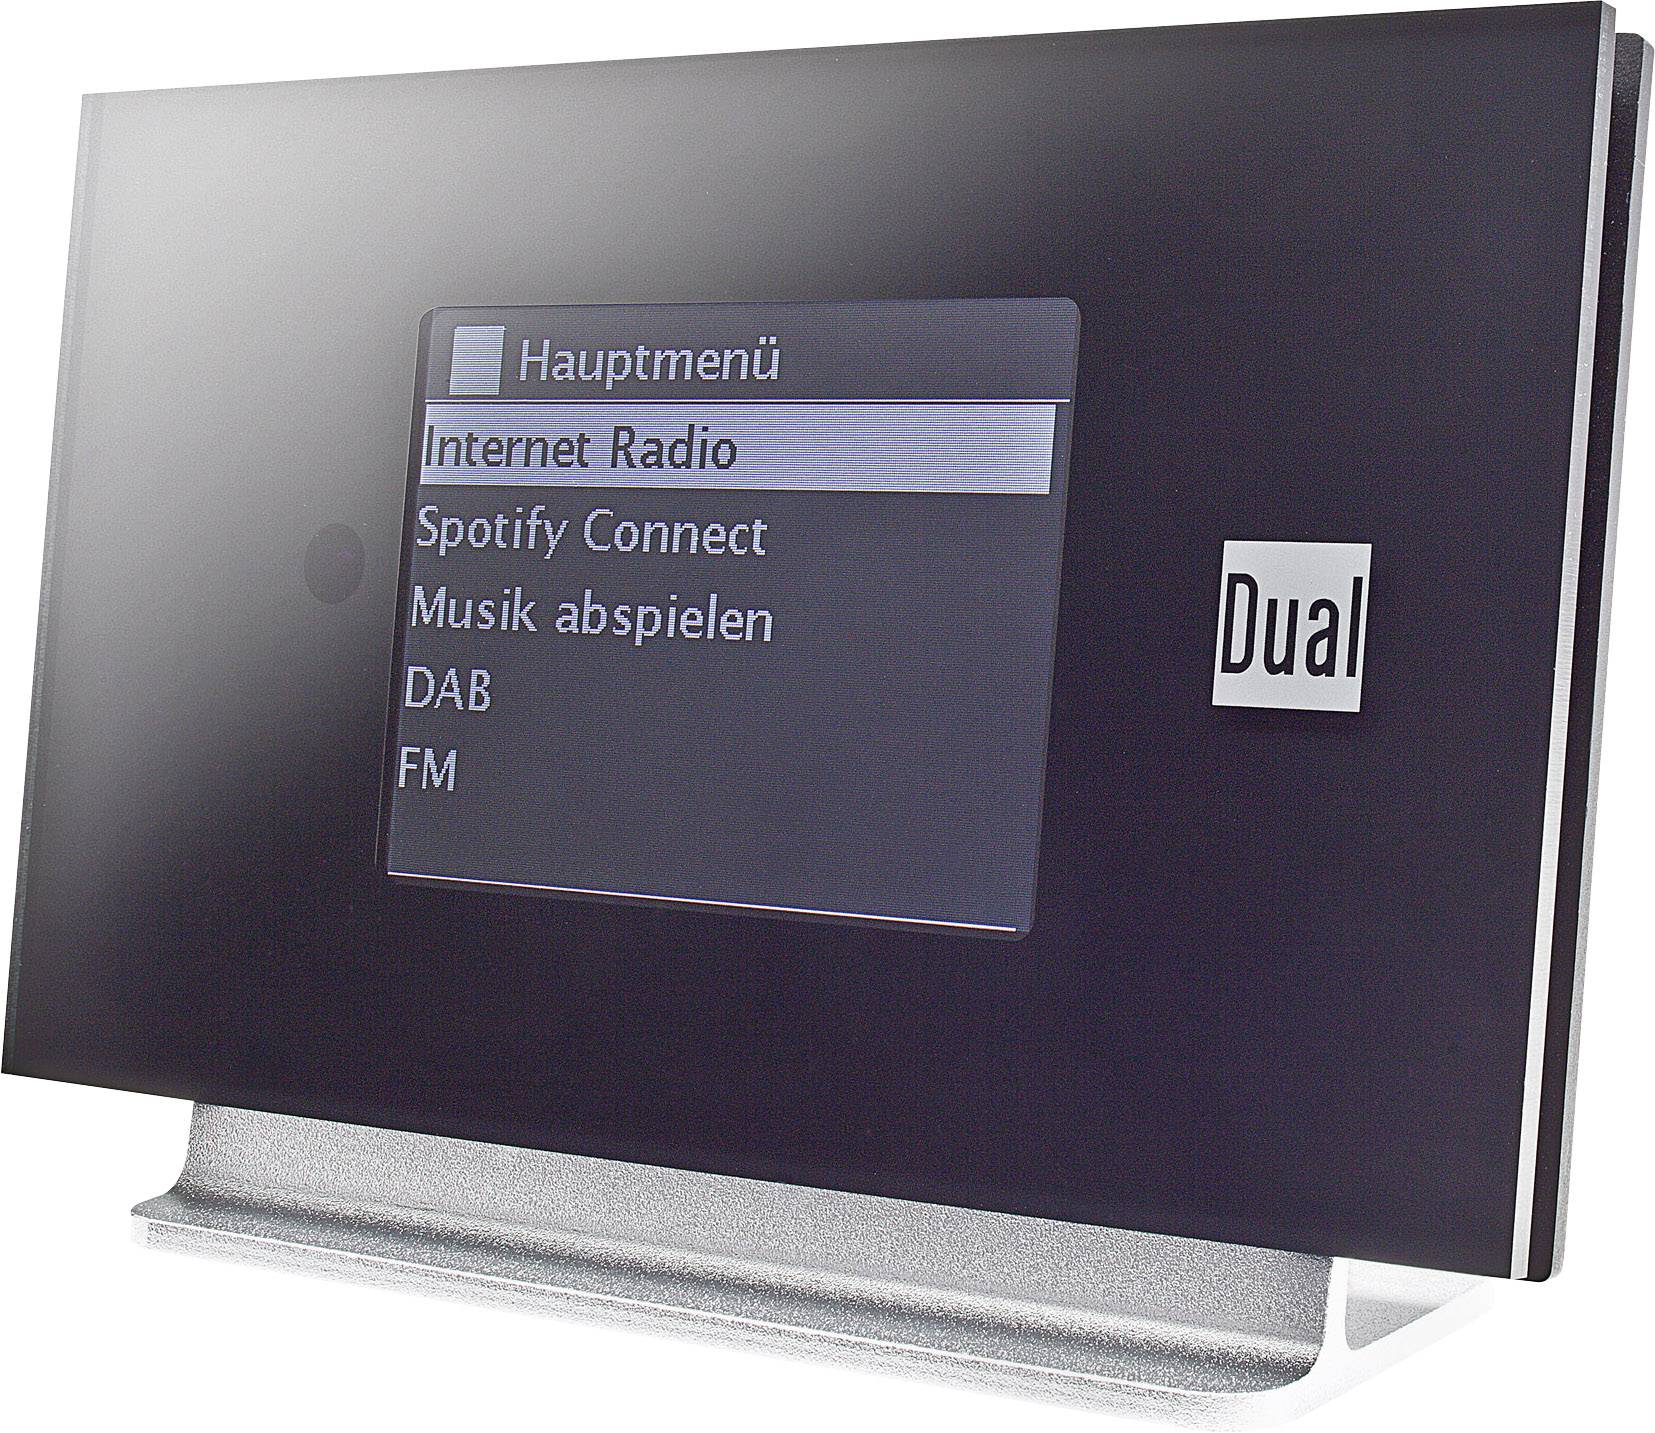 Dual IR 3A Internet radio adapter DAB+, FM Bluetooth, Internet radio Black, Silver Conrad.com